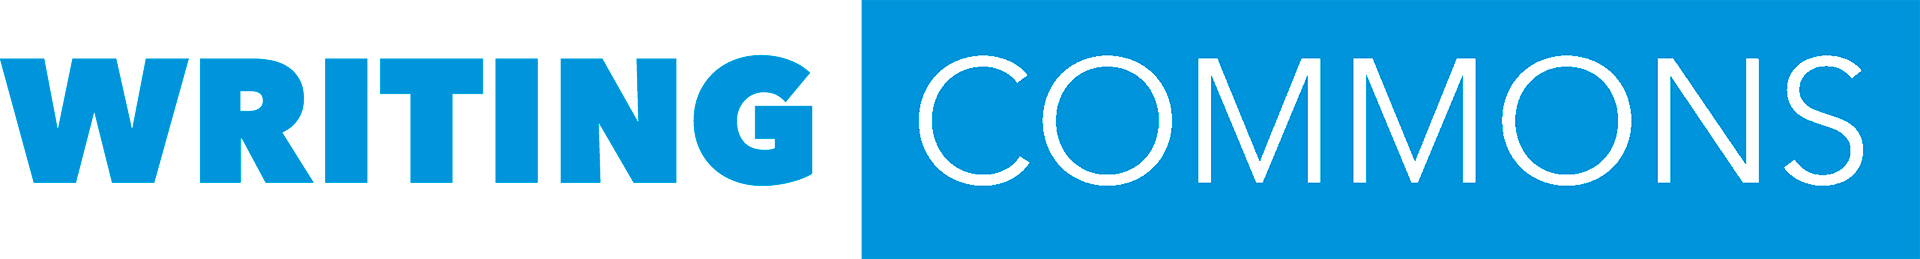 Writing Commons logo